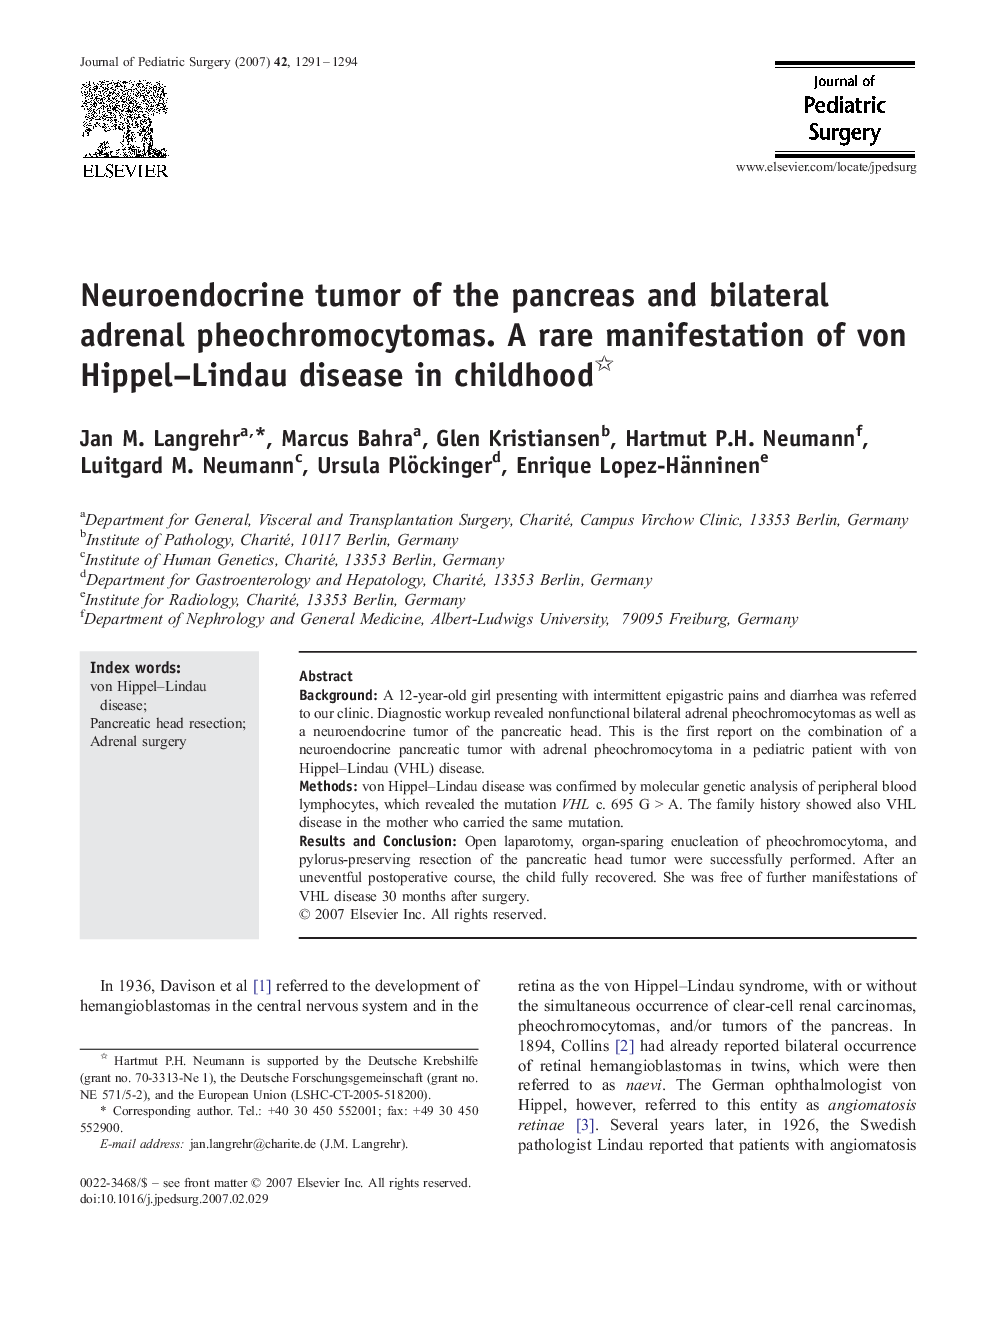 Neuroendocrine tumor of the pancreas and bilateral adrenal pheochromocytomas. A rare manifestation of von Hippel–Lindau disease in childhood 